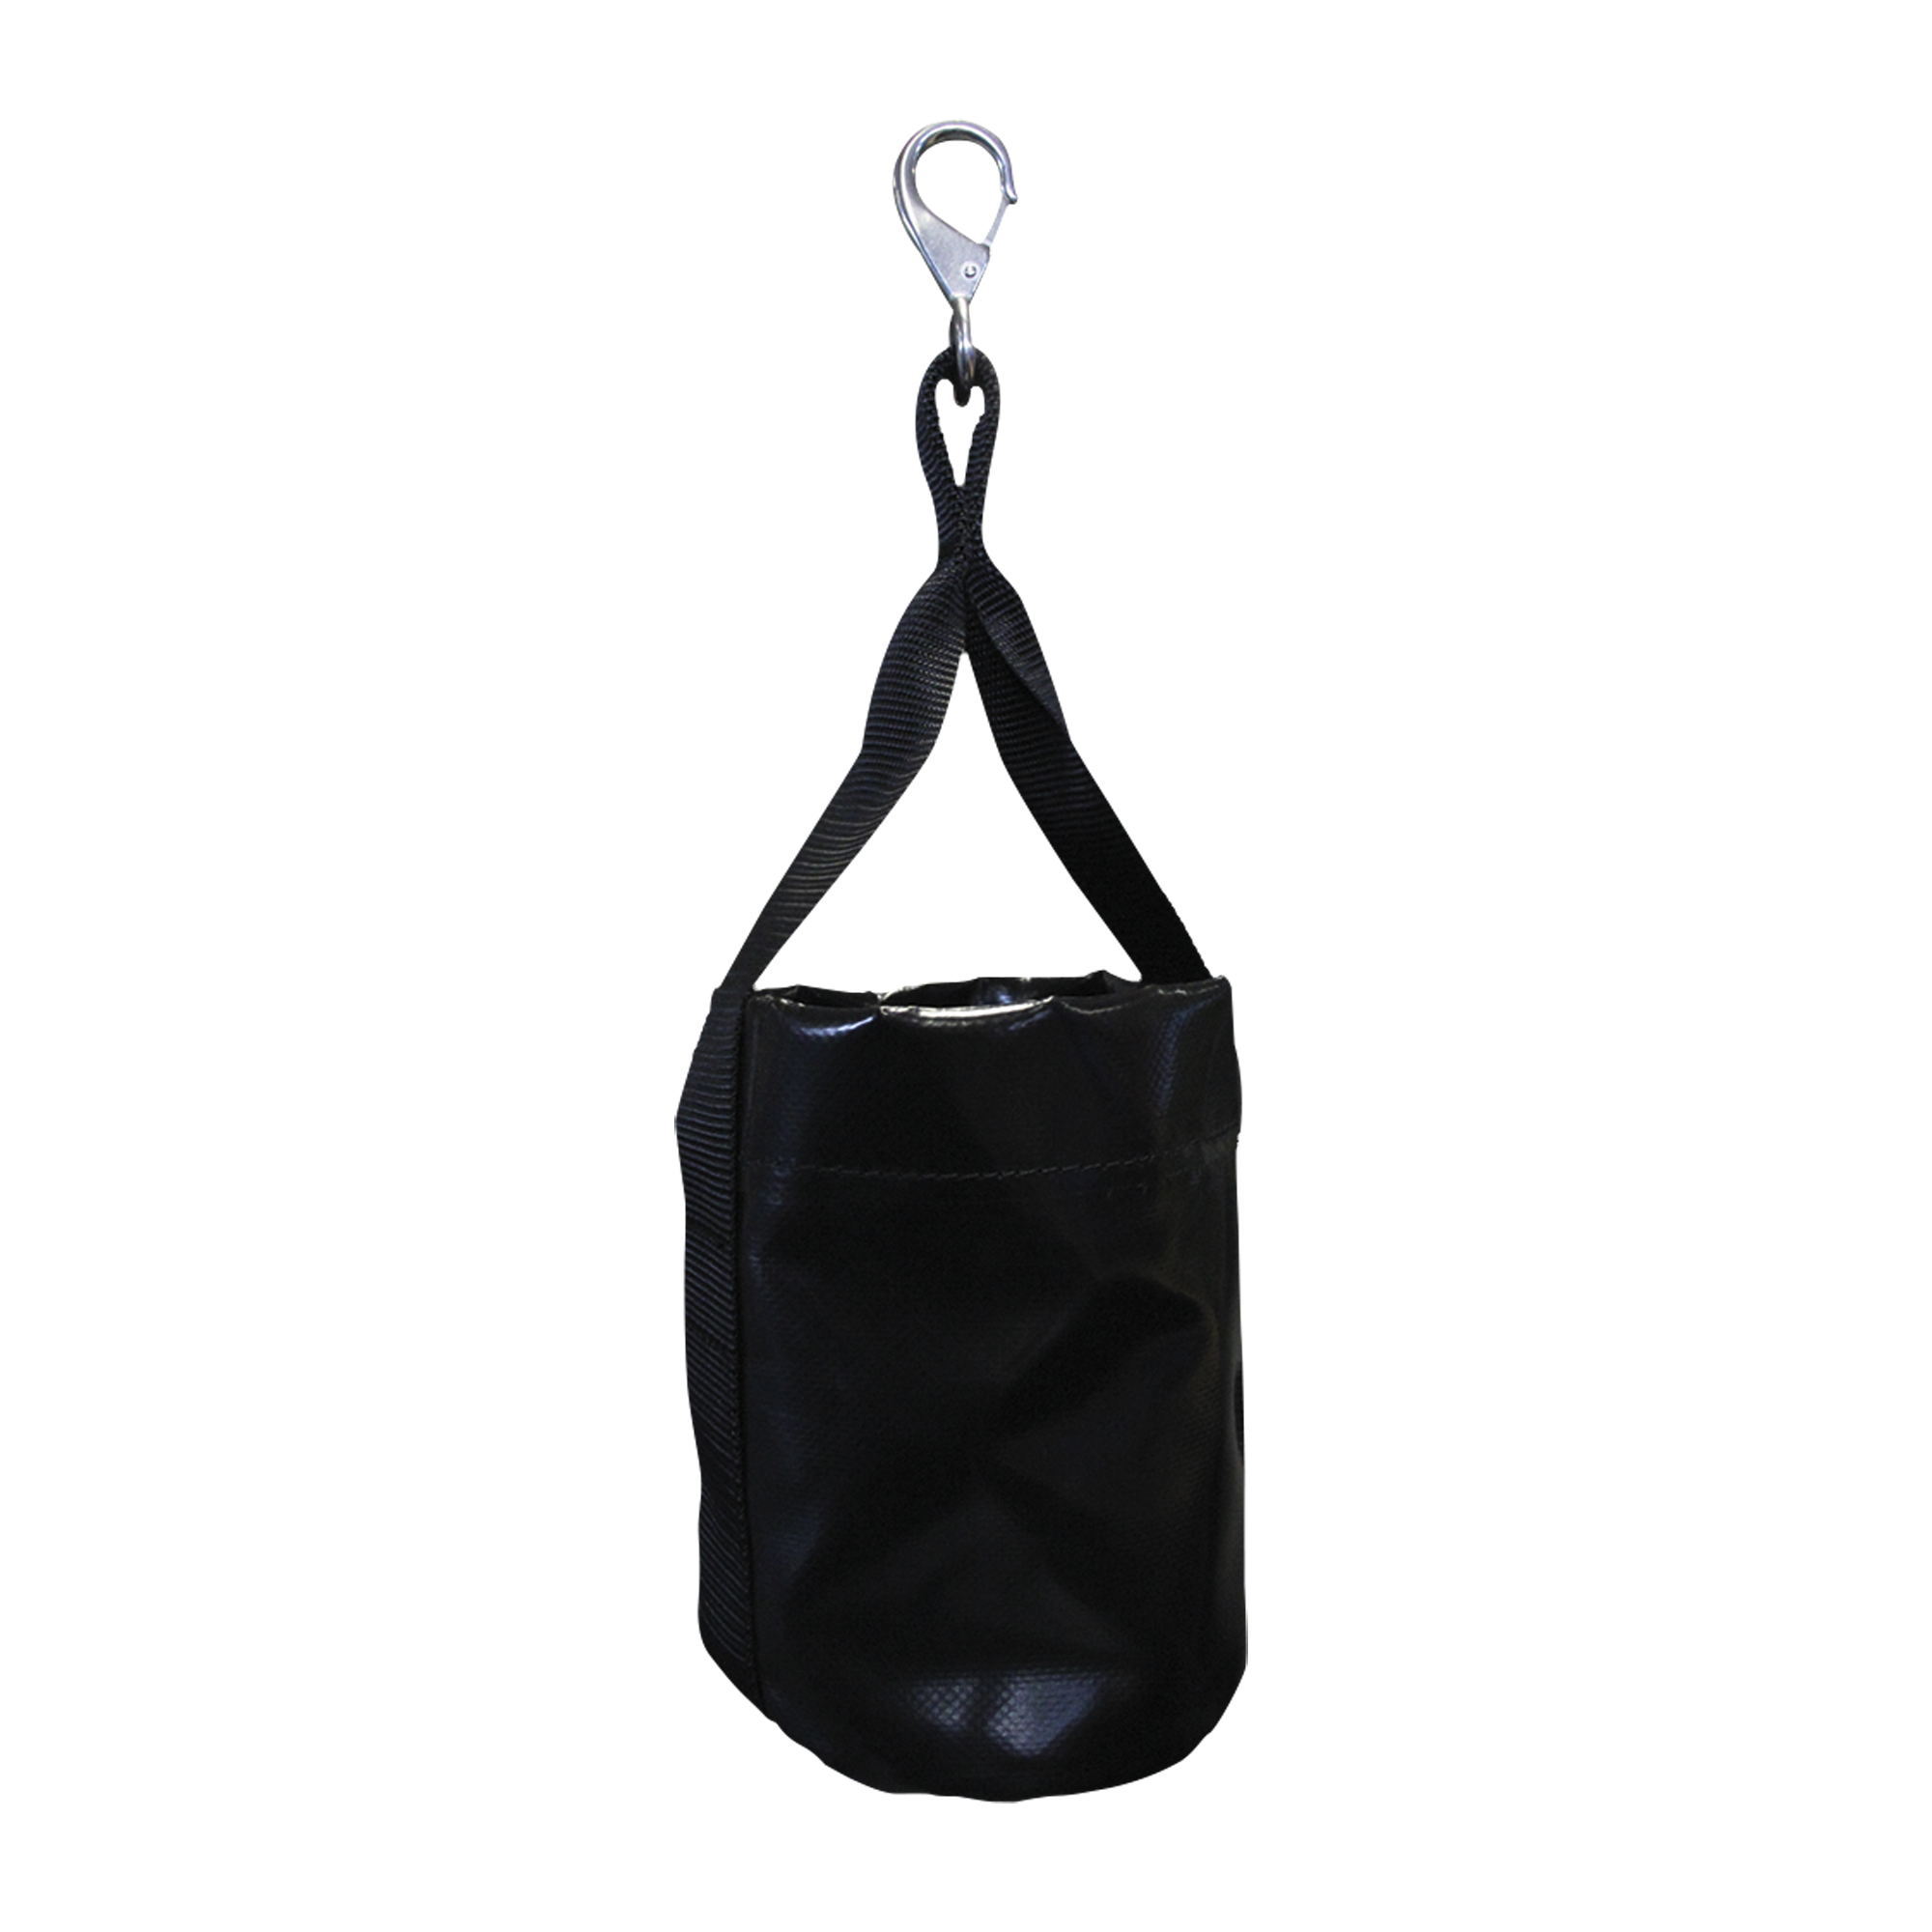 Eller Chain Bag for Chain Hoist für 0,25 t 150 mm x 20 cm